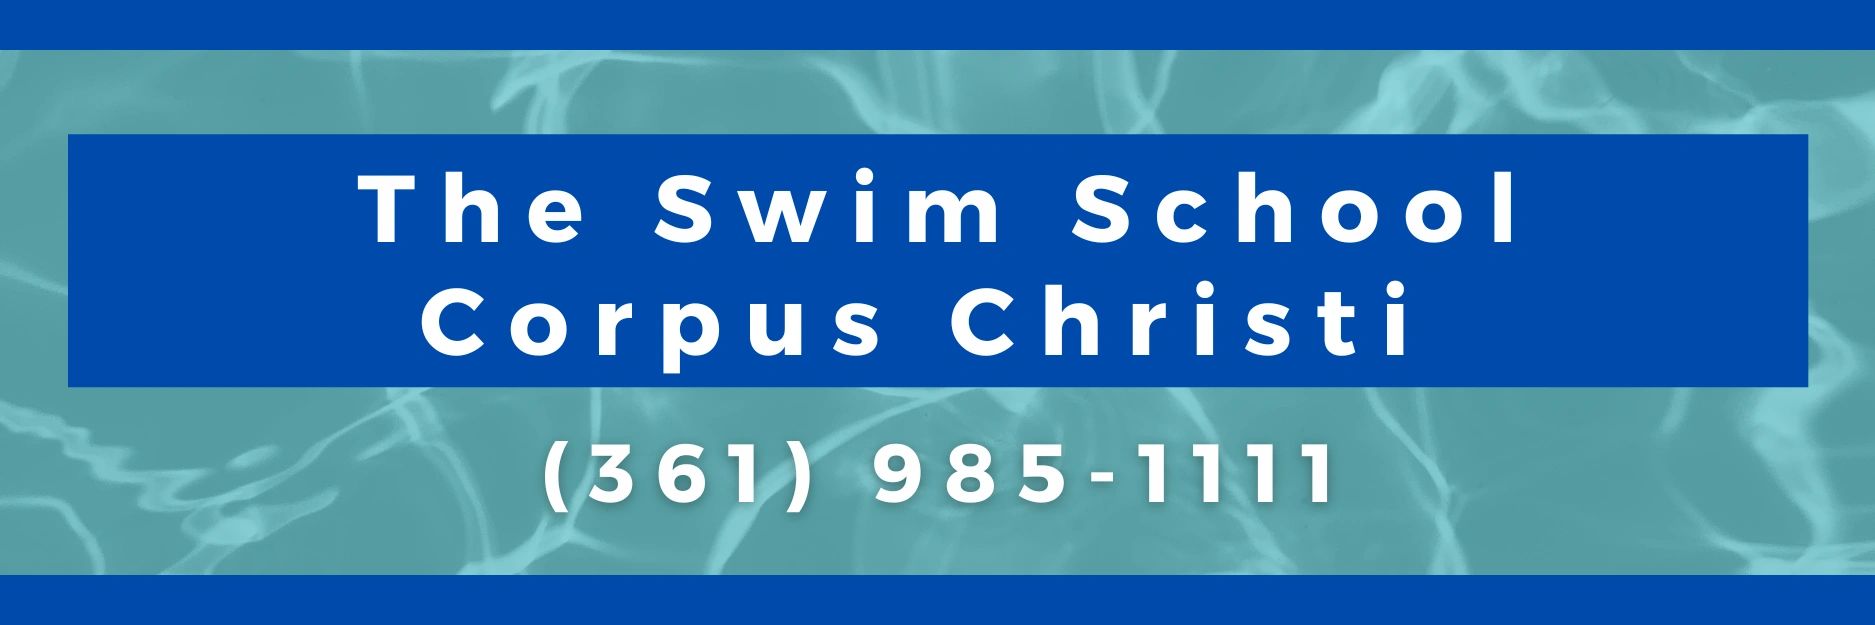 The Swim School Corpus Christi